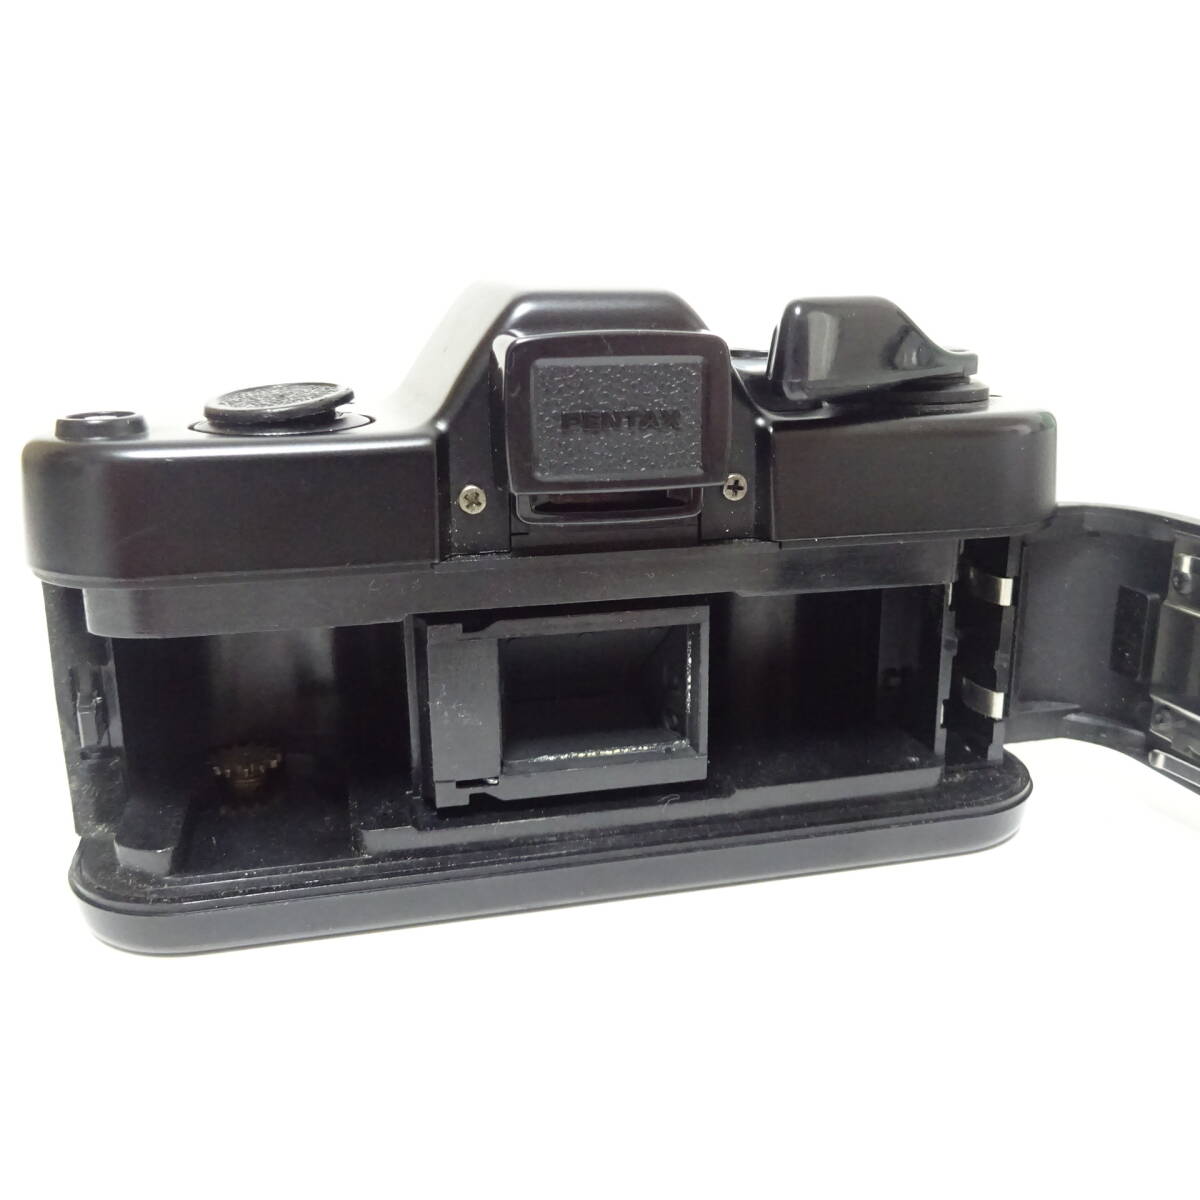 ASAHI PENTAX auto 110 SUPER フィルム一眼カメラ ケース付き アクセサリーおまとめセット 動作未確認 80サイズ発送 K-2656687-194mrrzの画像4